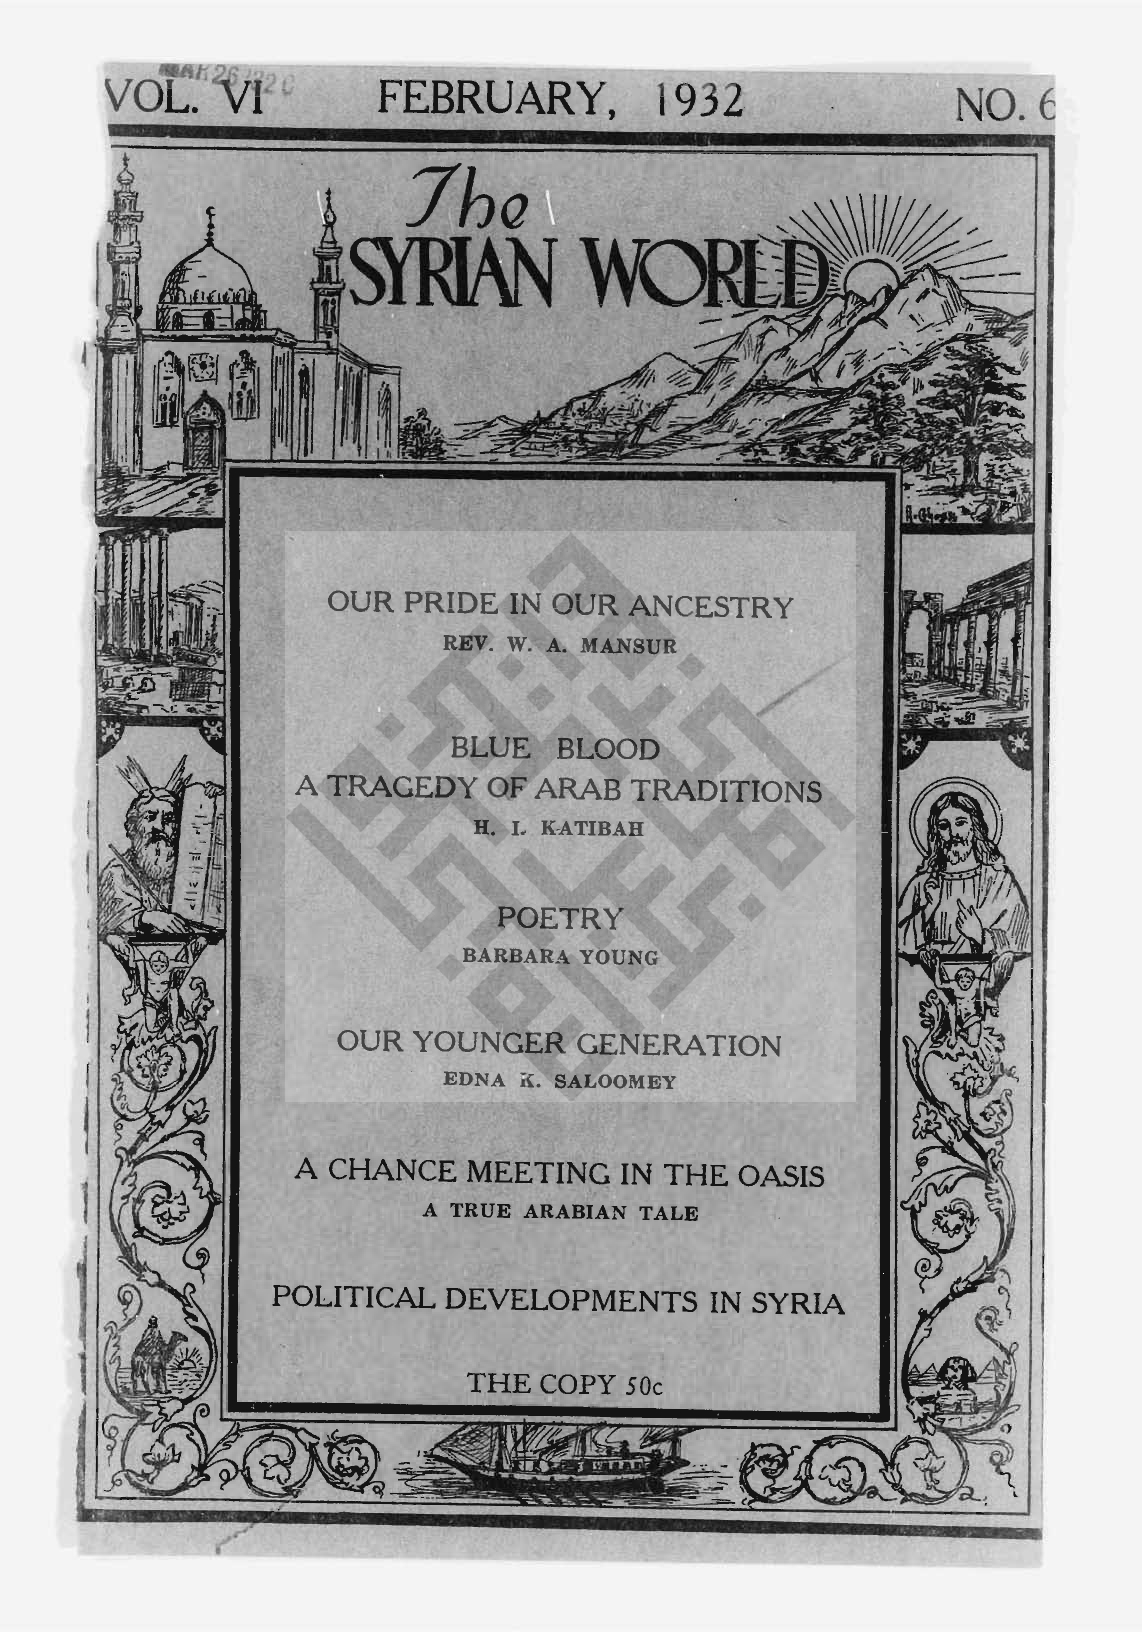 Freedom and Slavery [poem], The Syrian World, 6, 6, February 1932, p. 43